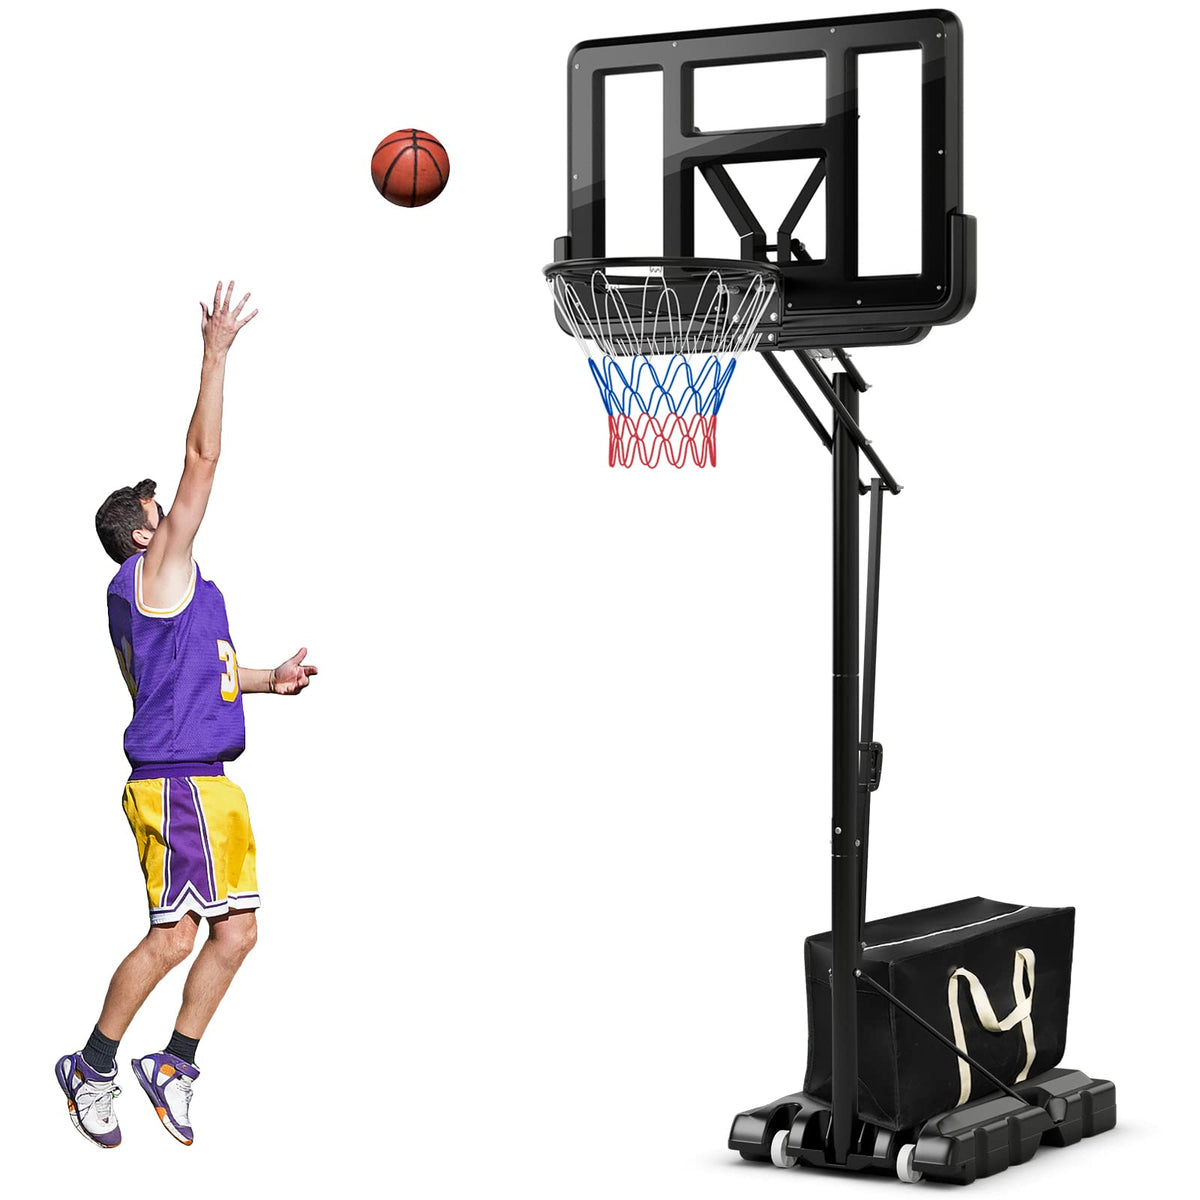 Goplus Portable Basketball Hoop, 8 to 10ft 5-Level Height Adjustable Basketball Goal Hoop Stand